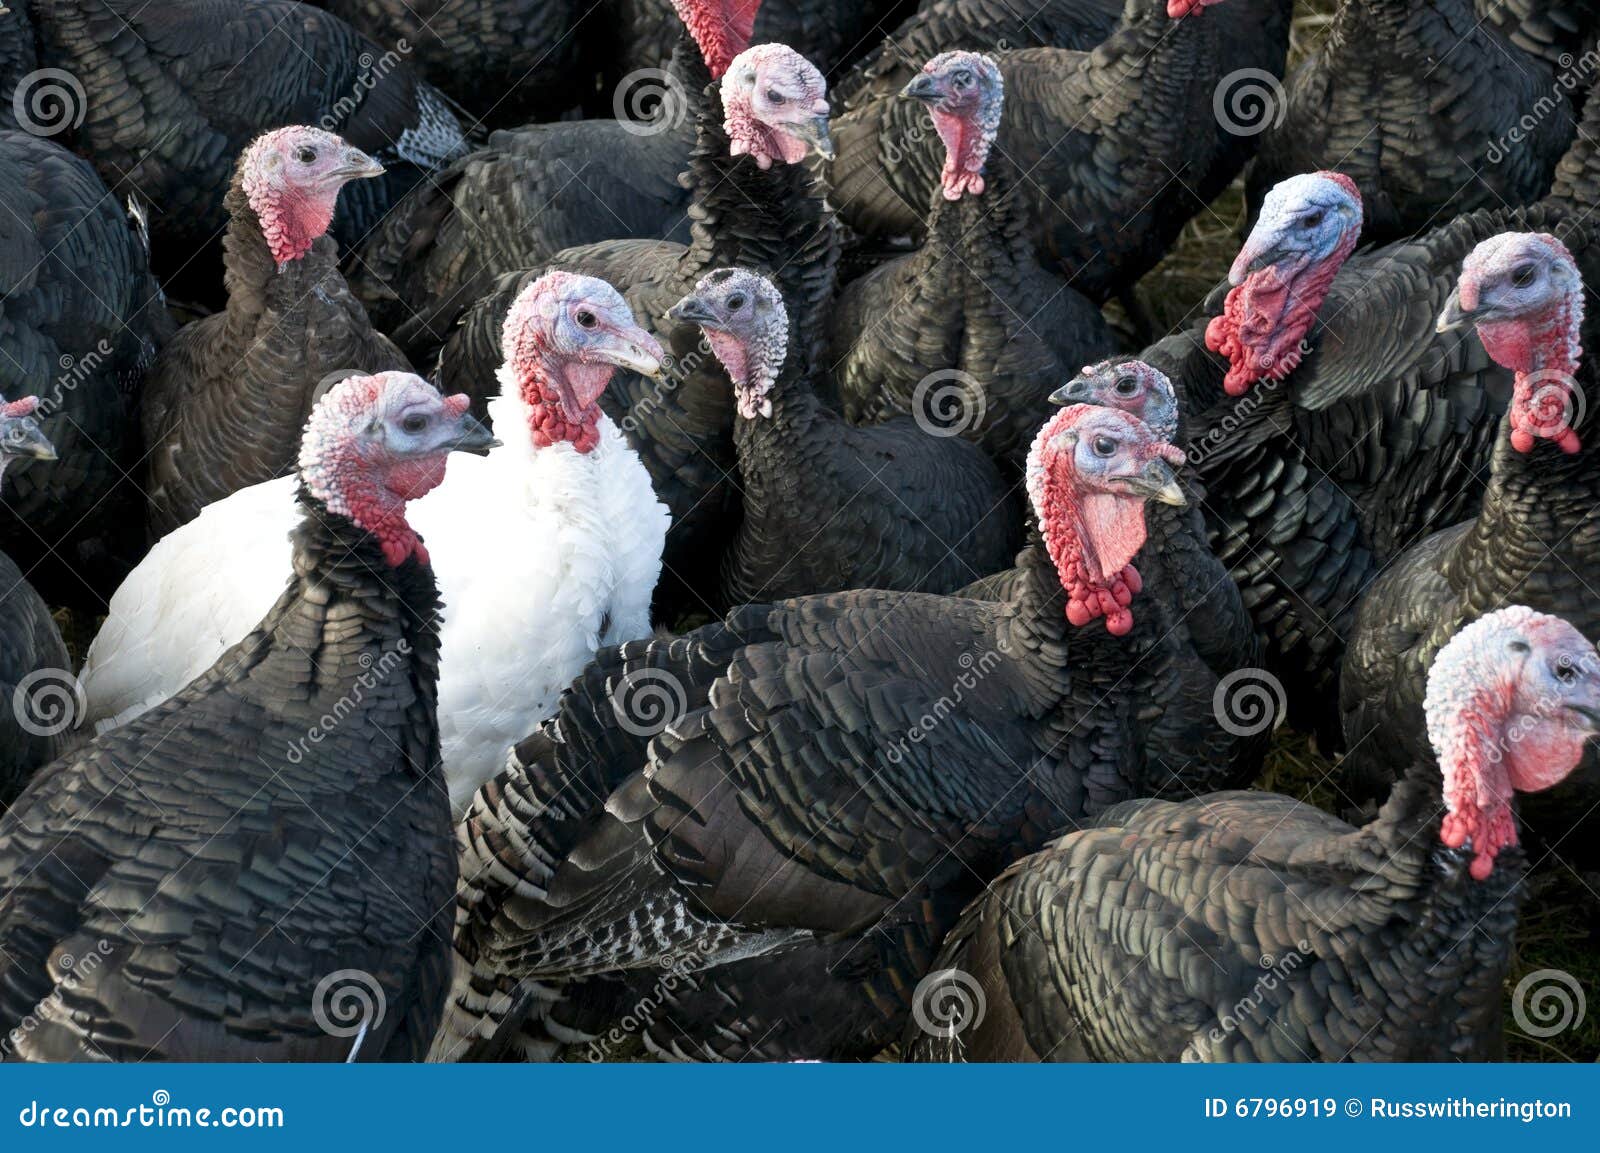 turkeys three